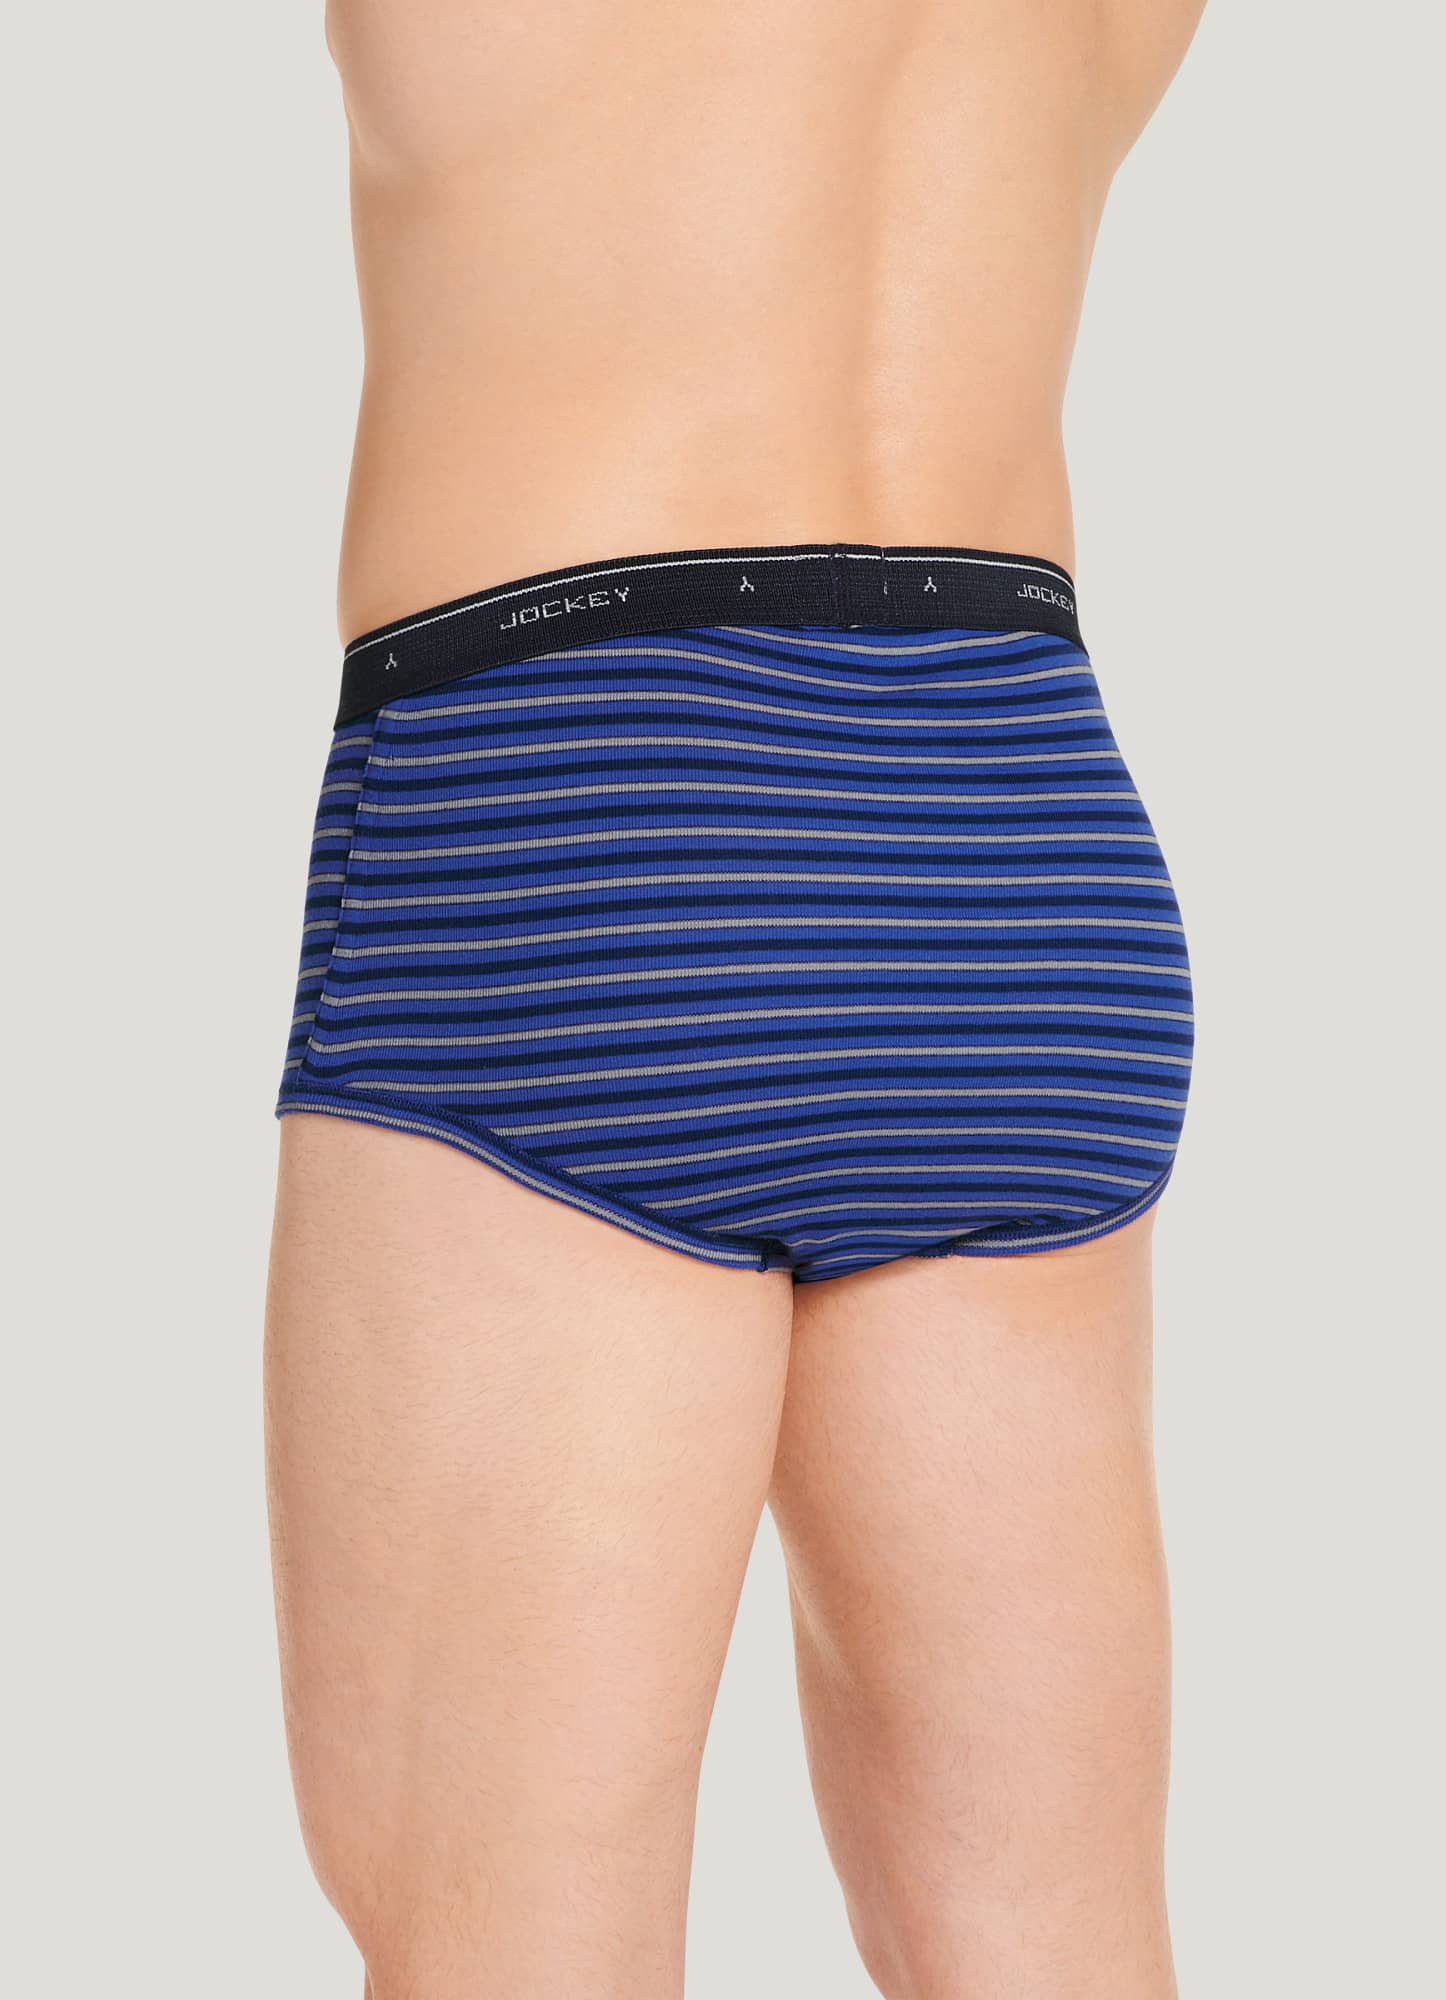 Pimfylm Cotton Underwear For Men Men's Underwear Classic Full Rise Brief B  XX-Large